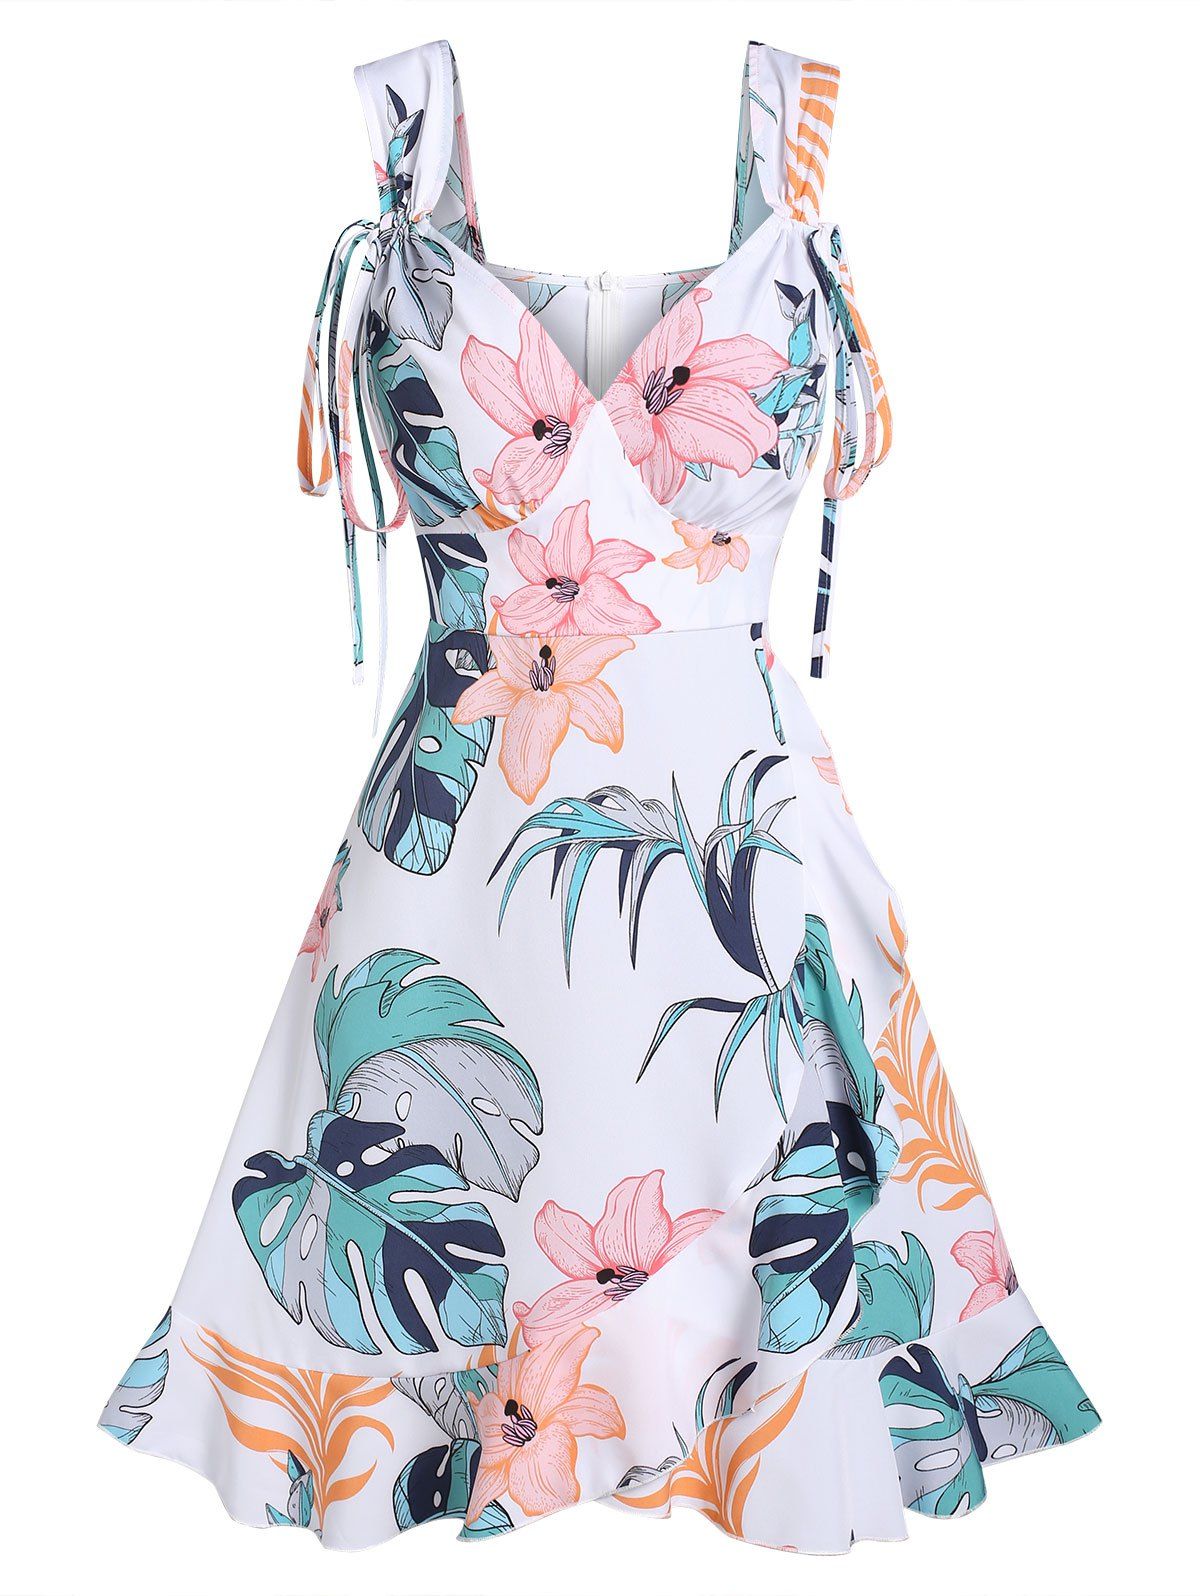 Tropical Leaf Flower Print Vacation Dress Cinched Flounce Hem A Line Mini Dress - WHITE XL